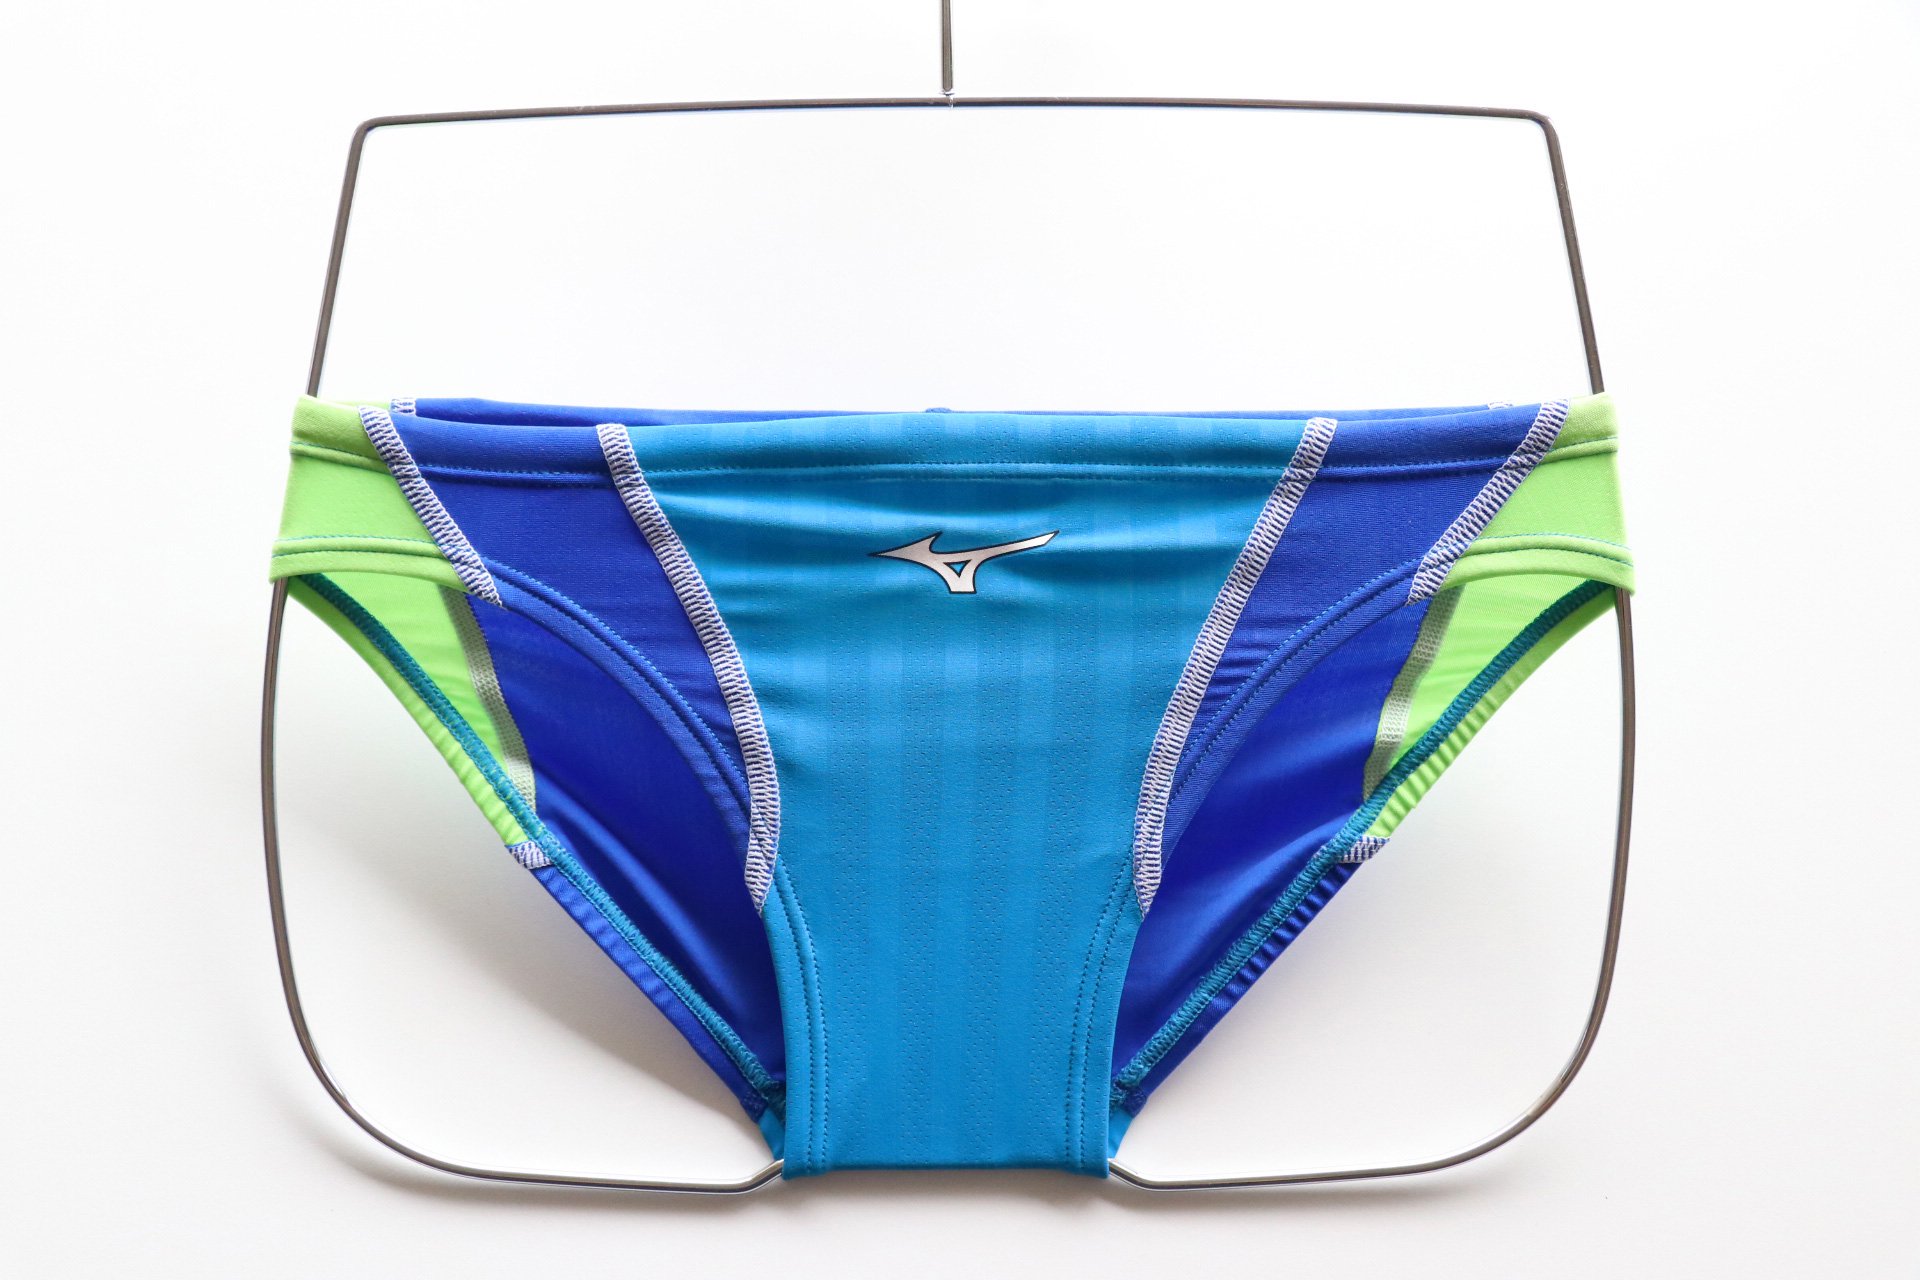 TOMSPORTS JAPAN - Competition Swimwear / Racing Swimsuits - Speedo ...